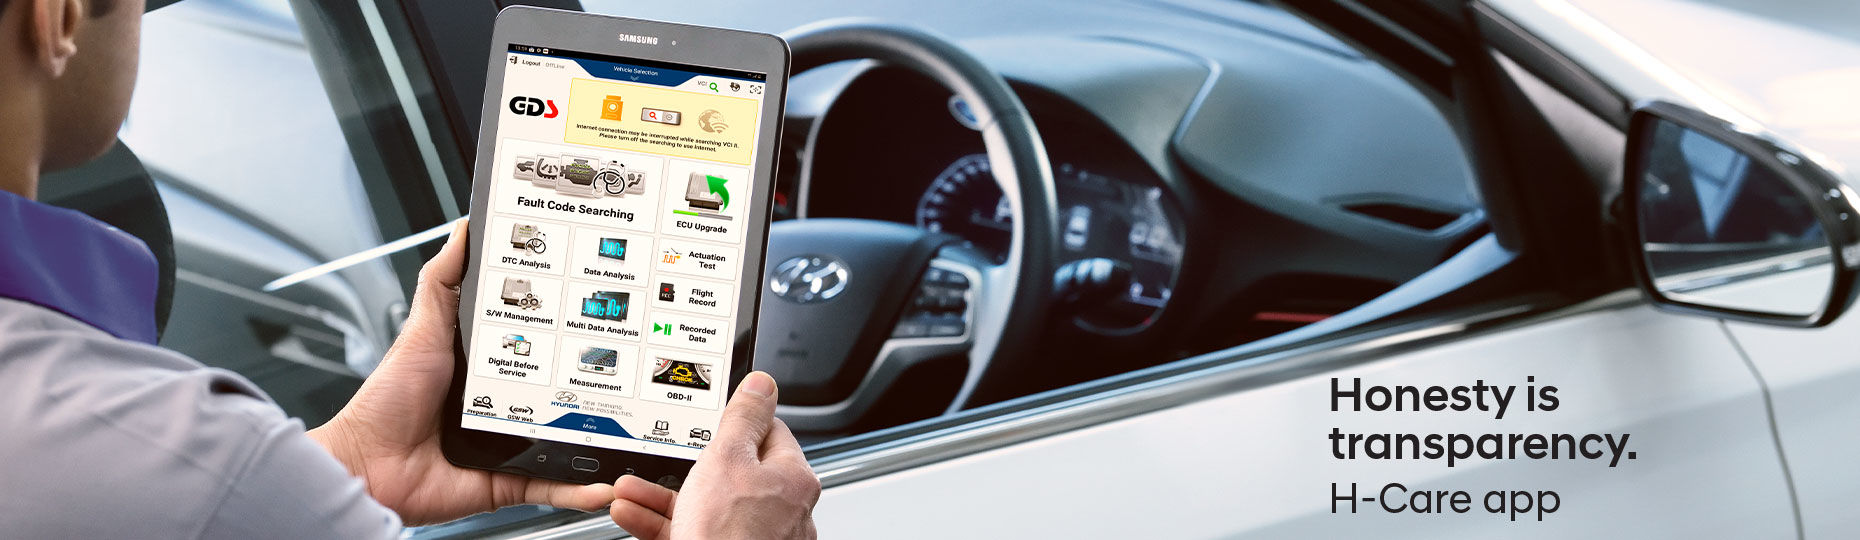 Hyundai-augumented-reality-experience-app